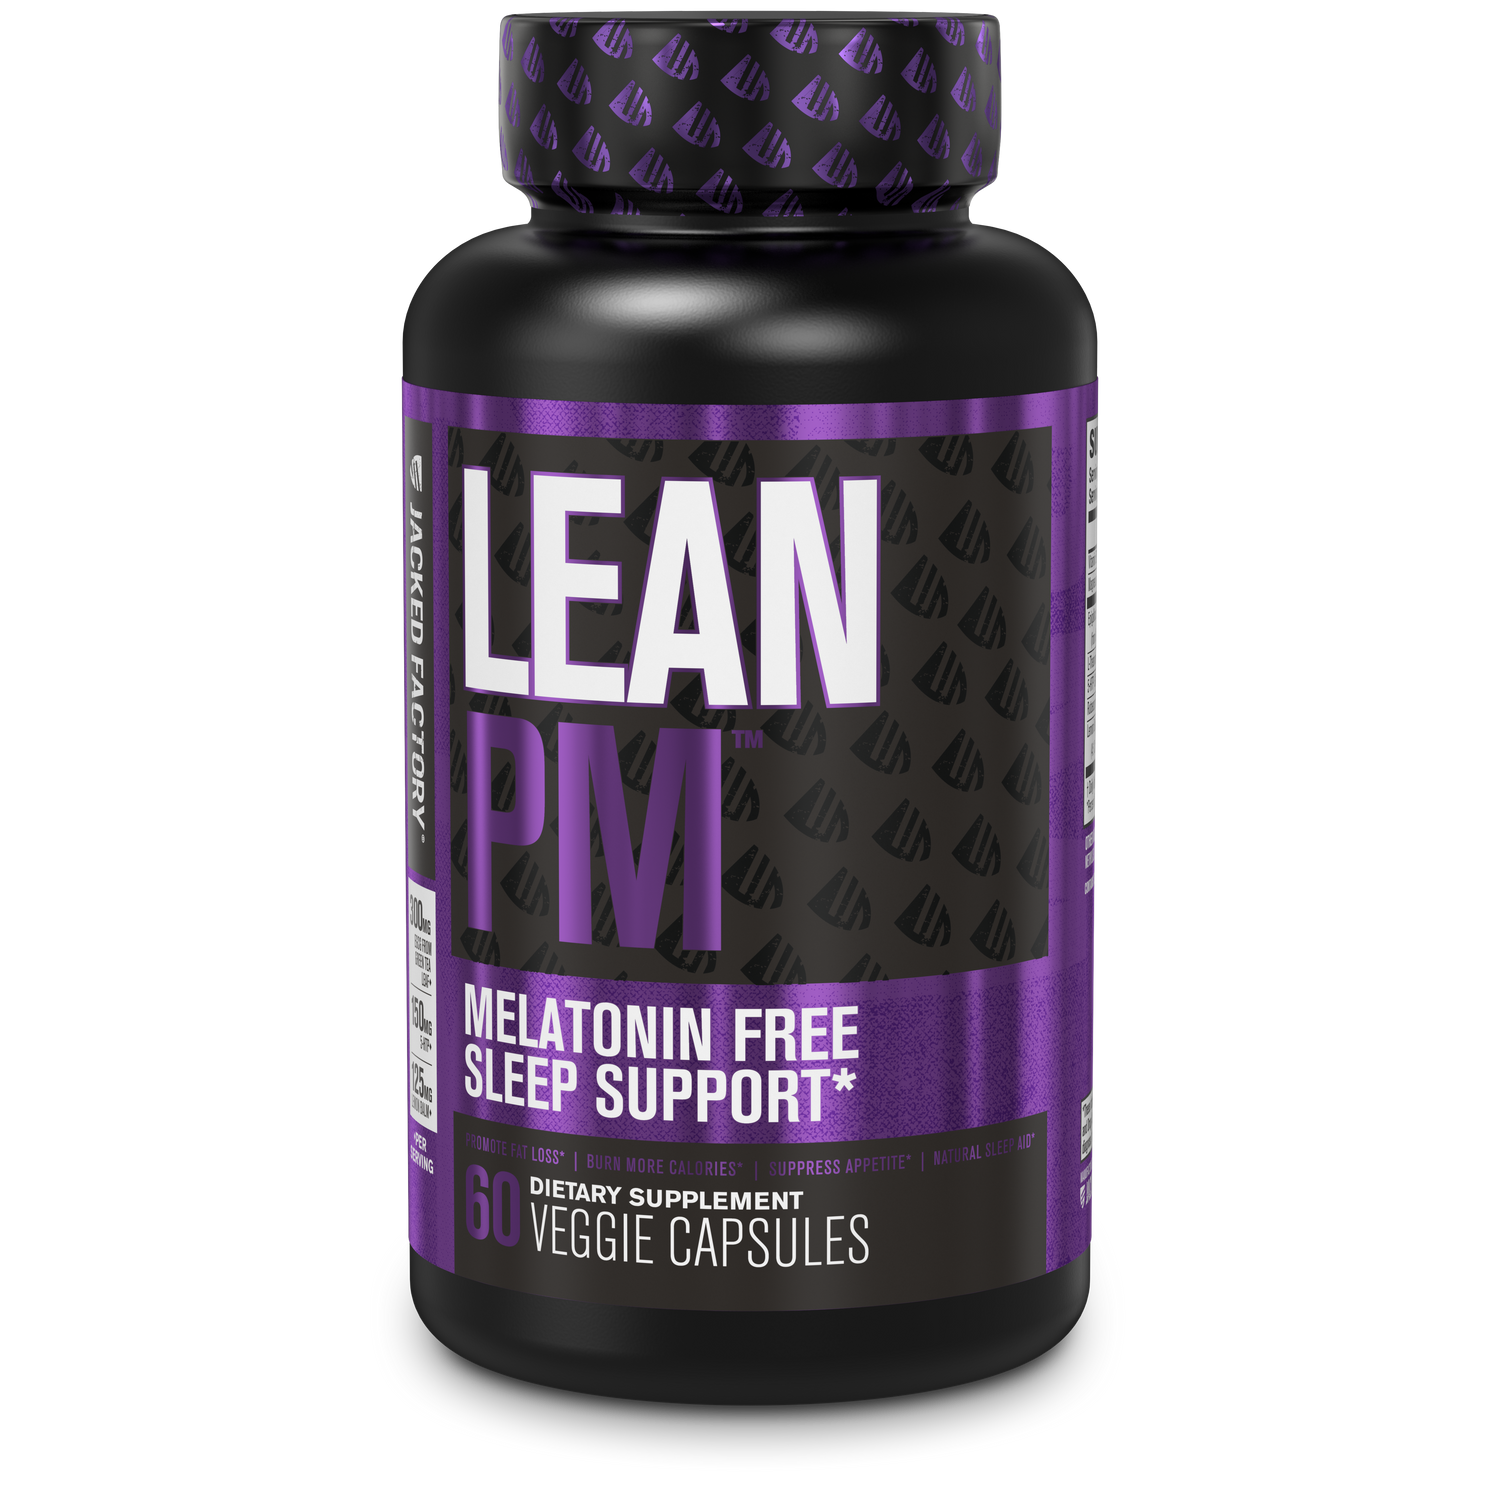 Jacked Factory's LEAN PM Melatonin Free Night Time Fat Burner & Sleep Aid (60 veggie capsules) in a black bottle with purple label